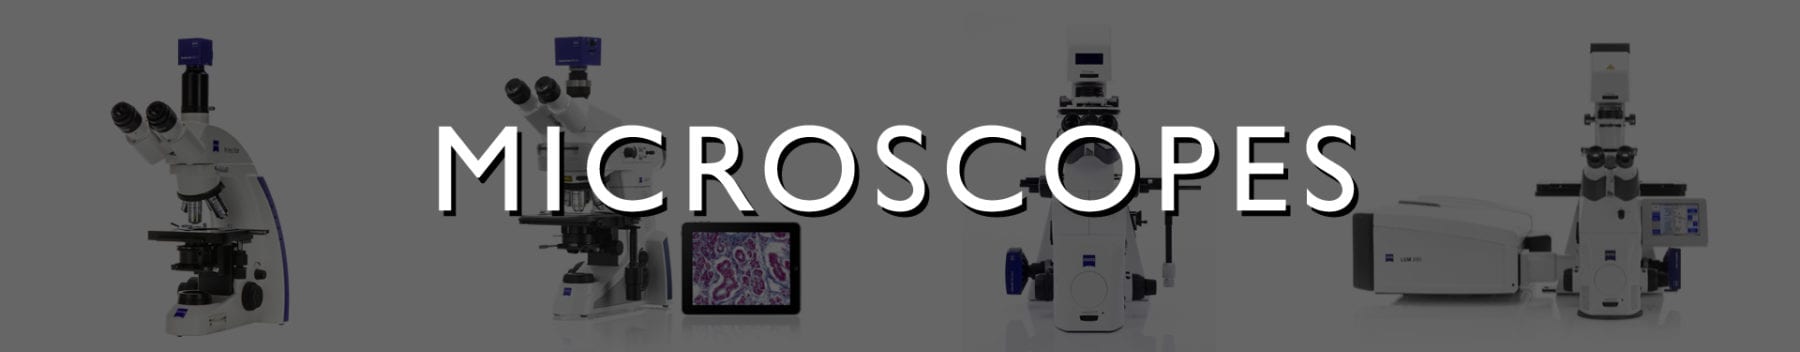 Microscopes for Sale - Micro-Optics New York